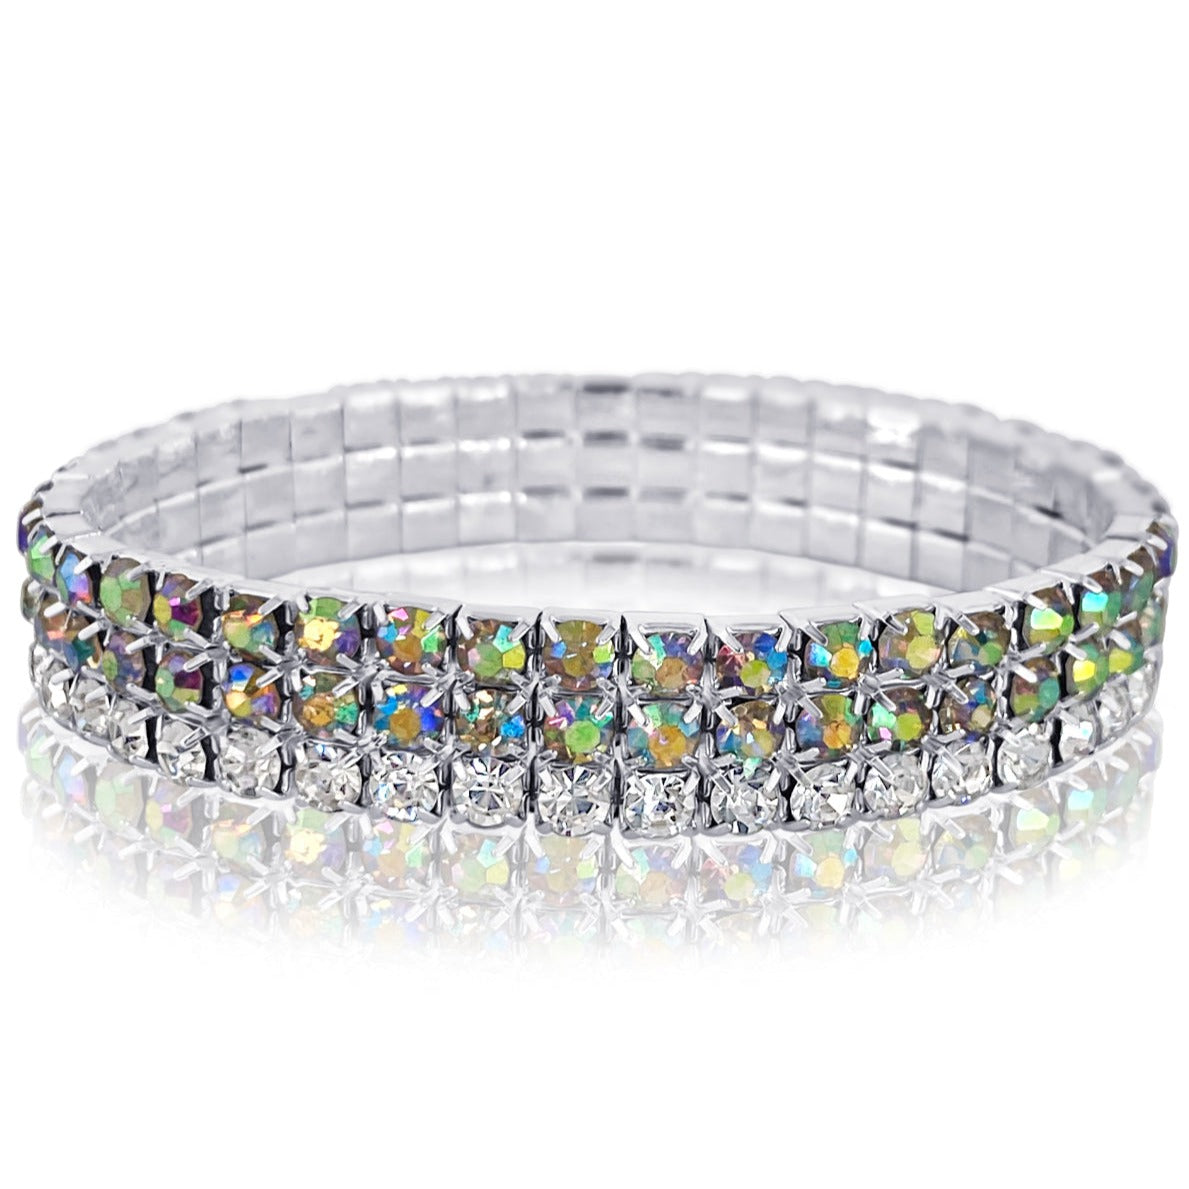 Madison - clear ab silver 3 line stretch rhinestone bracelet